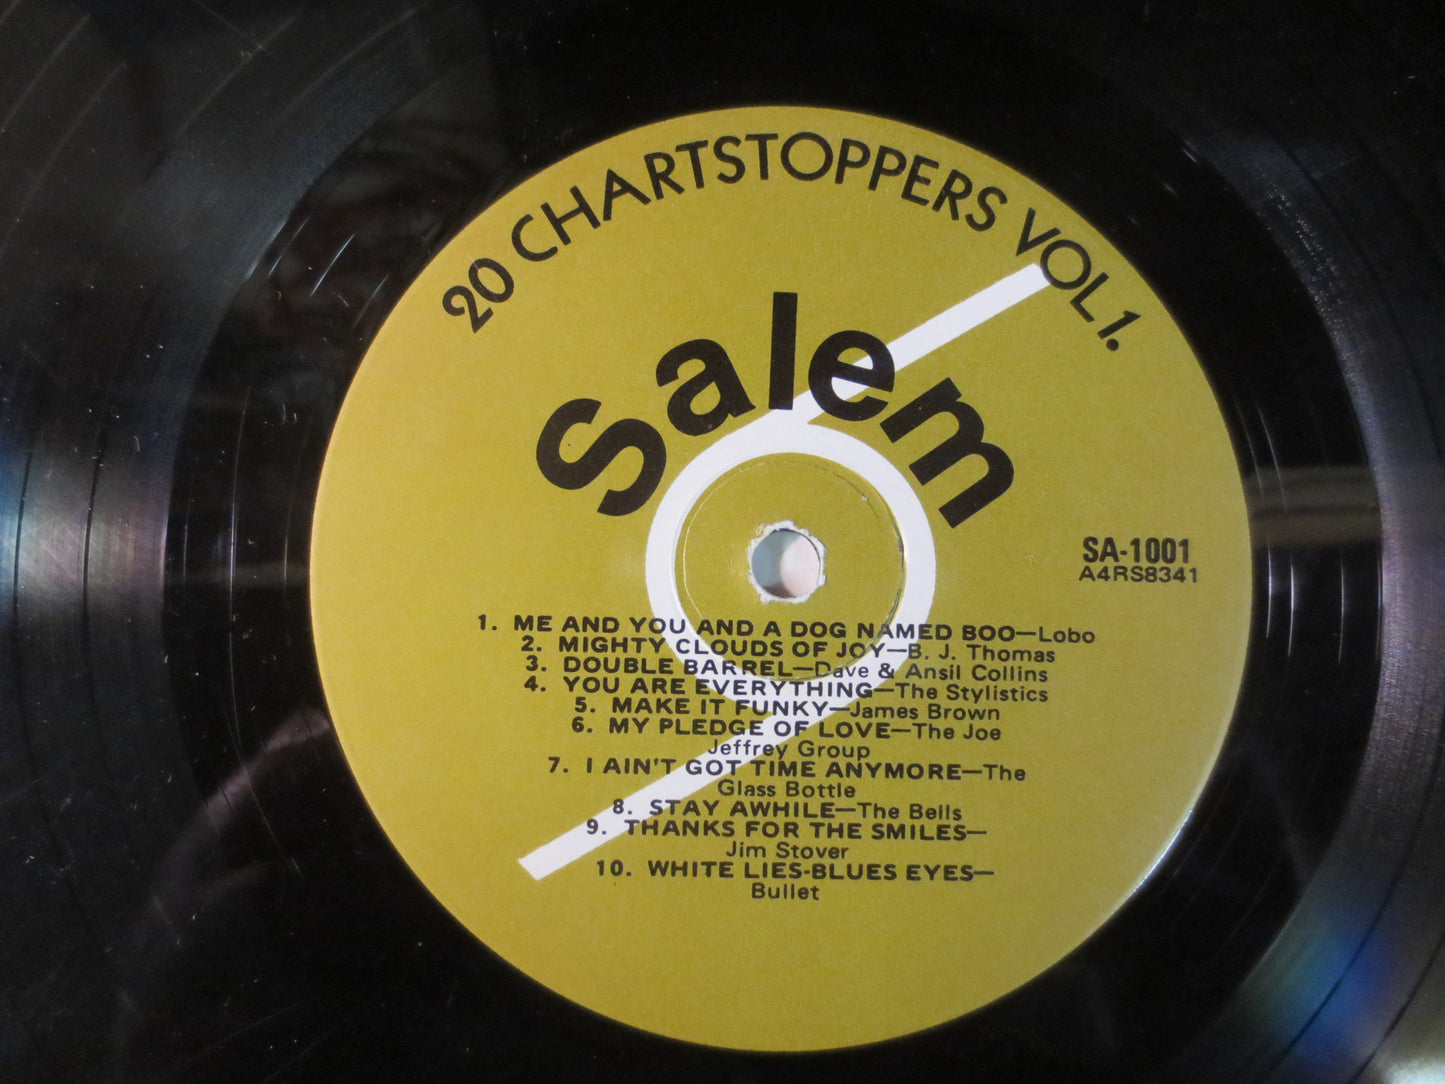 20 CHARTSTOPPERS, ORIGINAL HITS, Pop Record, Vinyl Lp, Vintage Vinyl, Records, Vinyl, Pop Album, Vinyl Record, 1974 Records